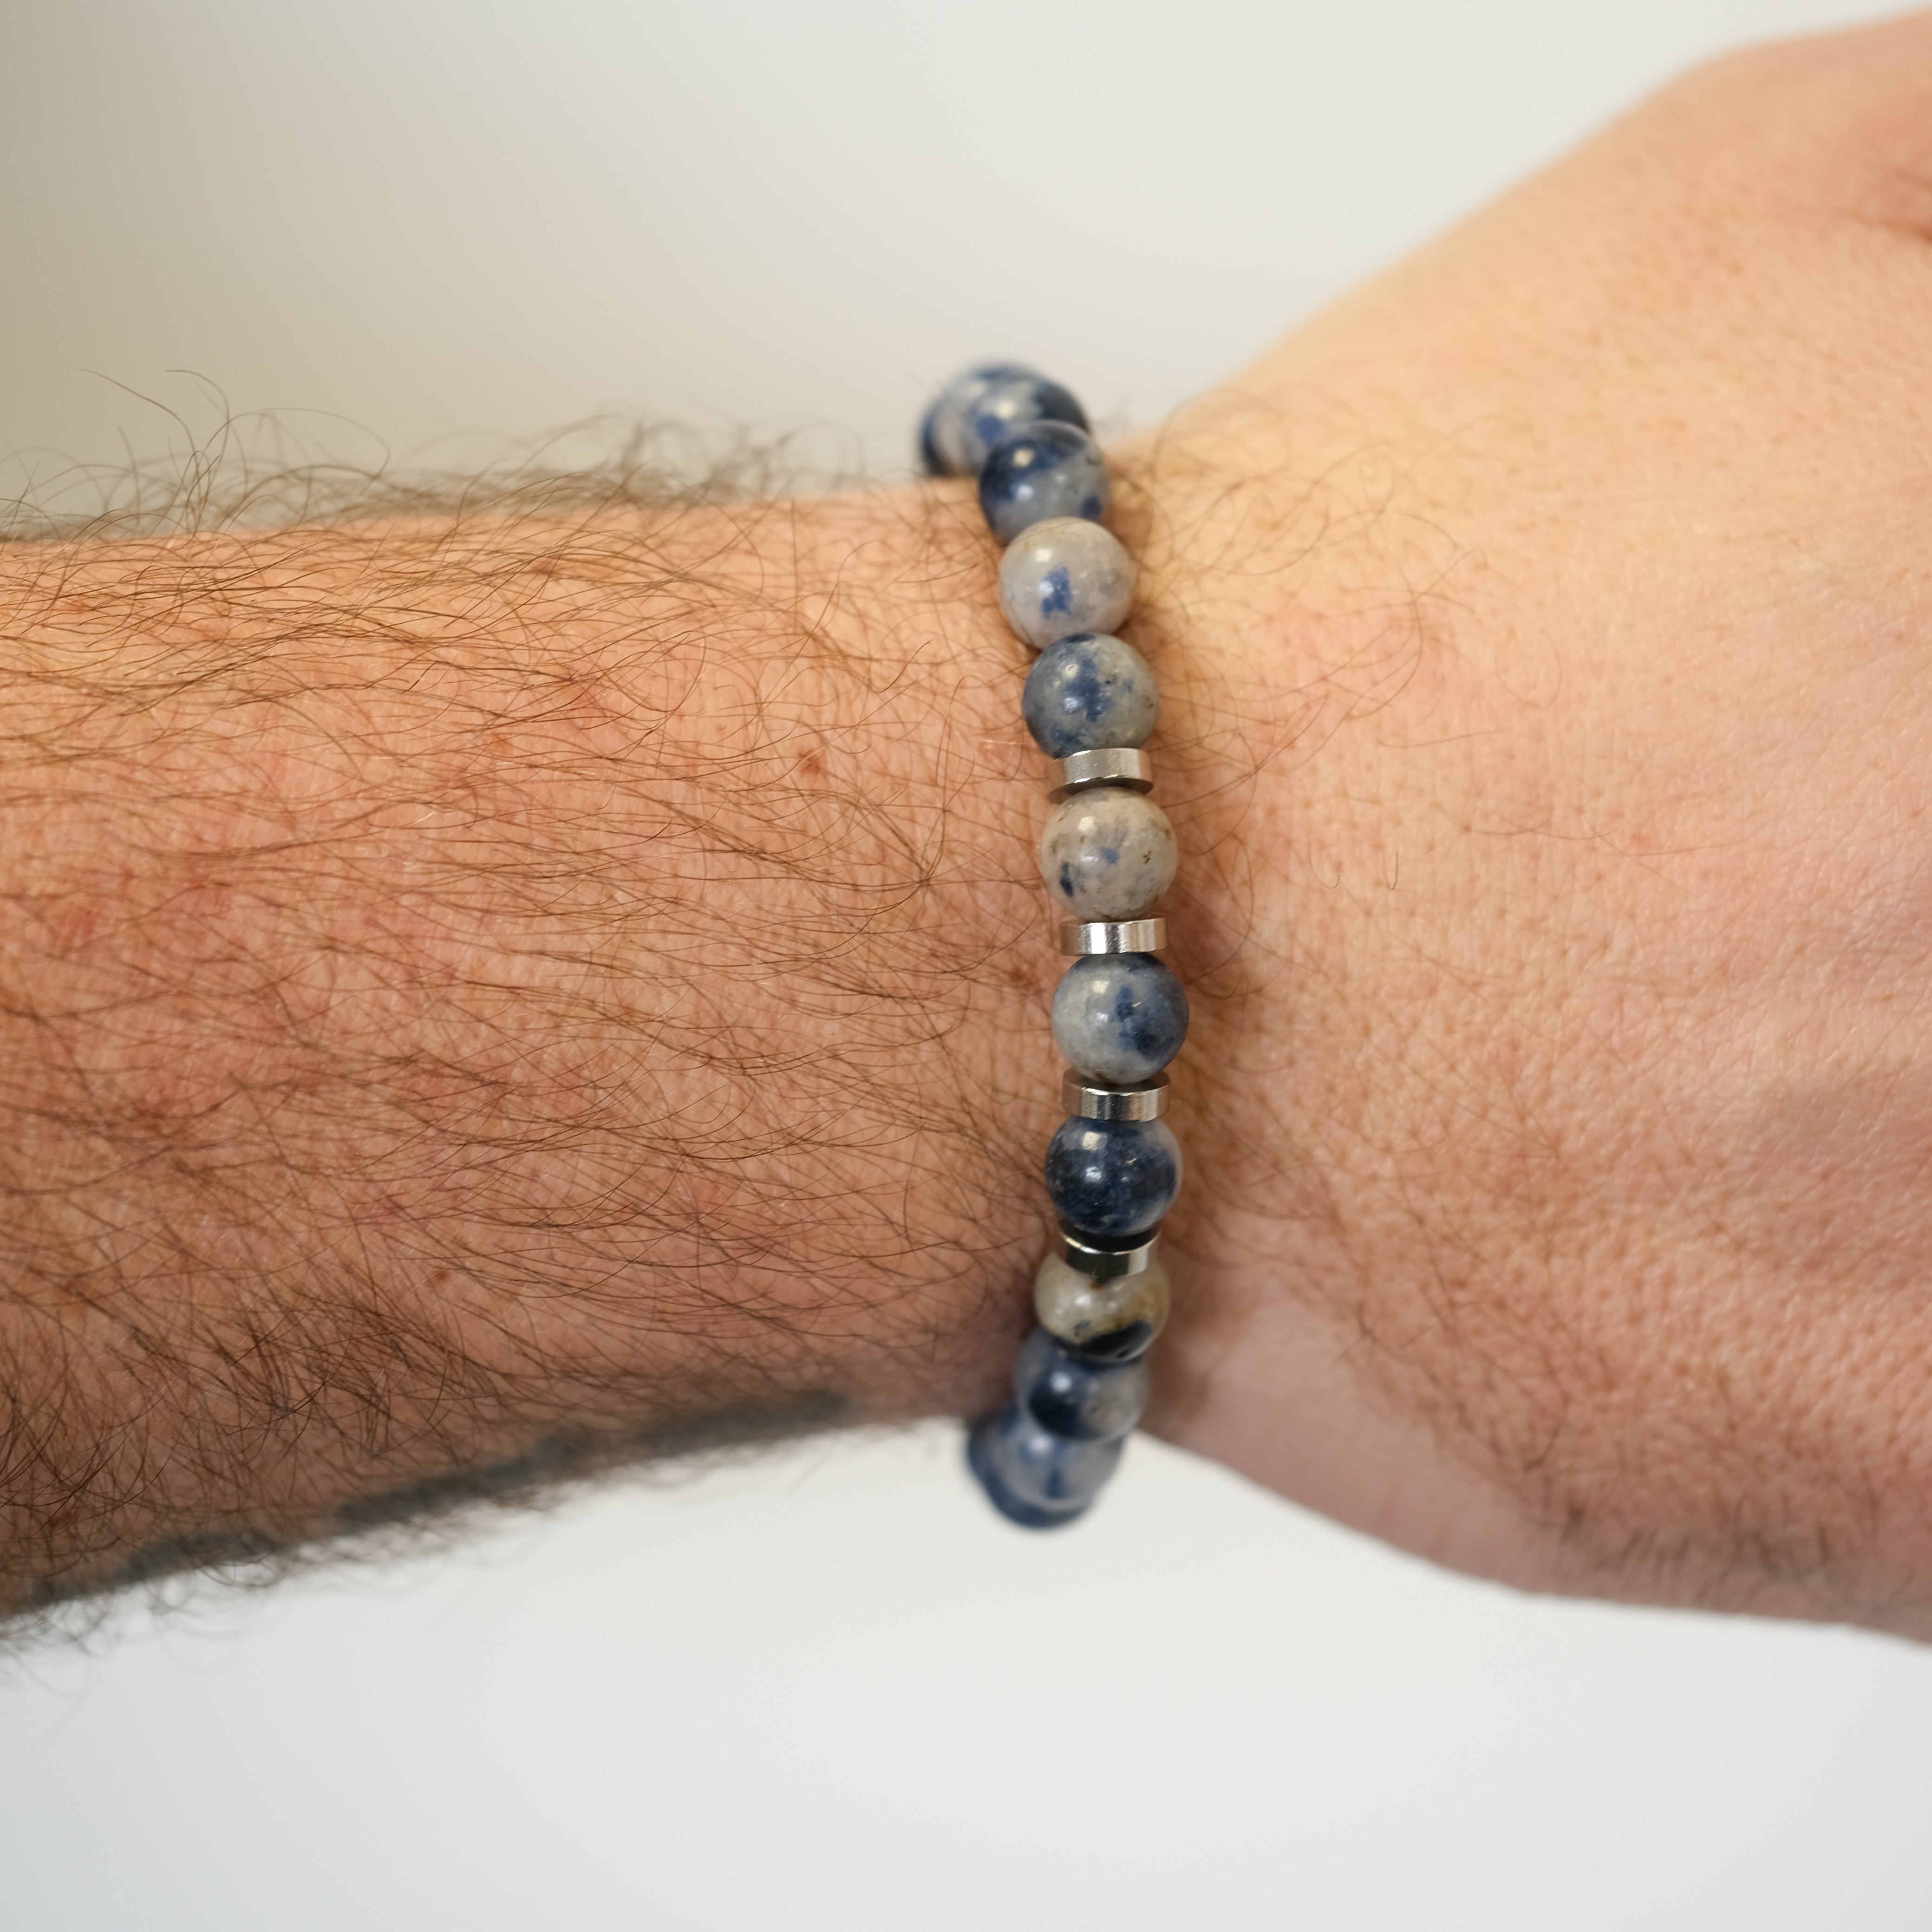 Pegmatite gemstone bracelet worn on a model's wrist